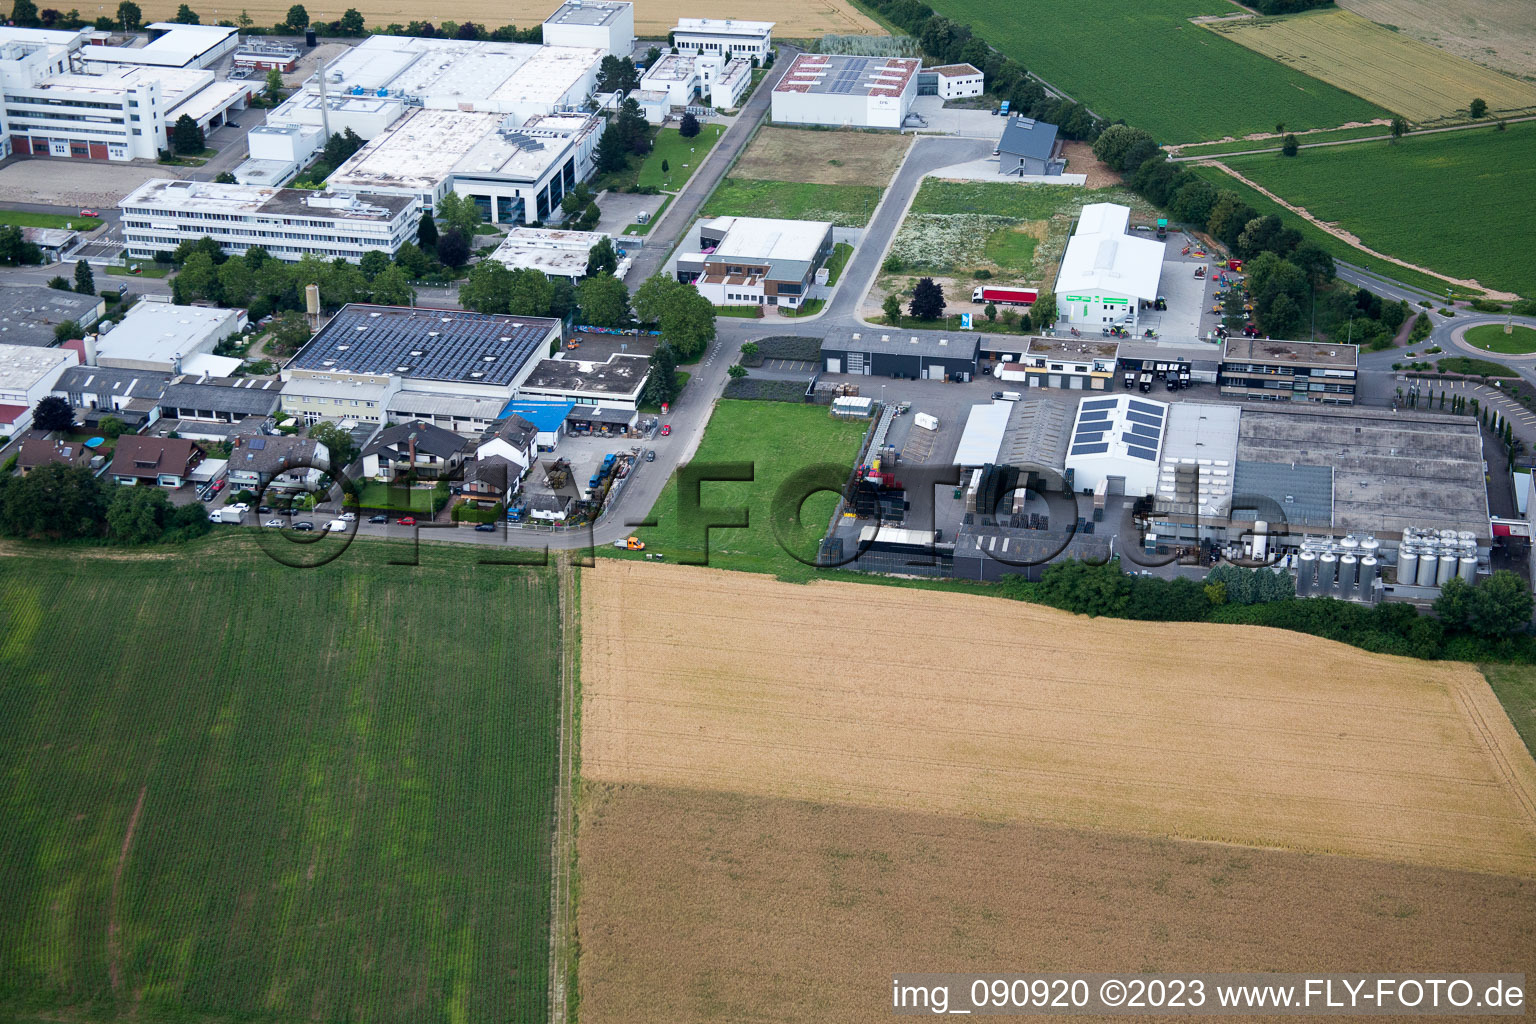 Plankstadt dans le département Bade-Wurtemberg, Allemagne vue du ciel